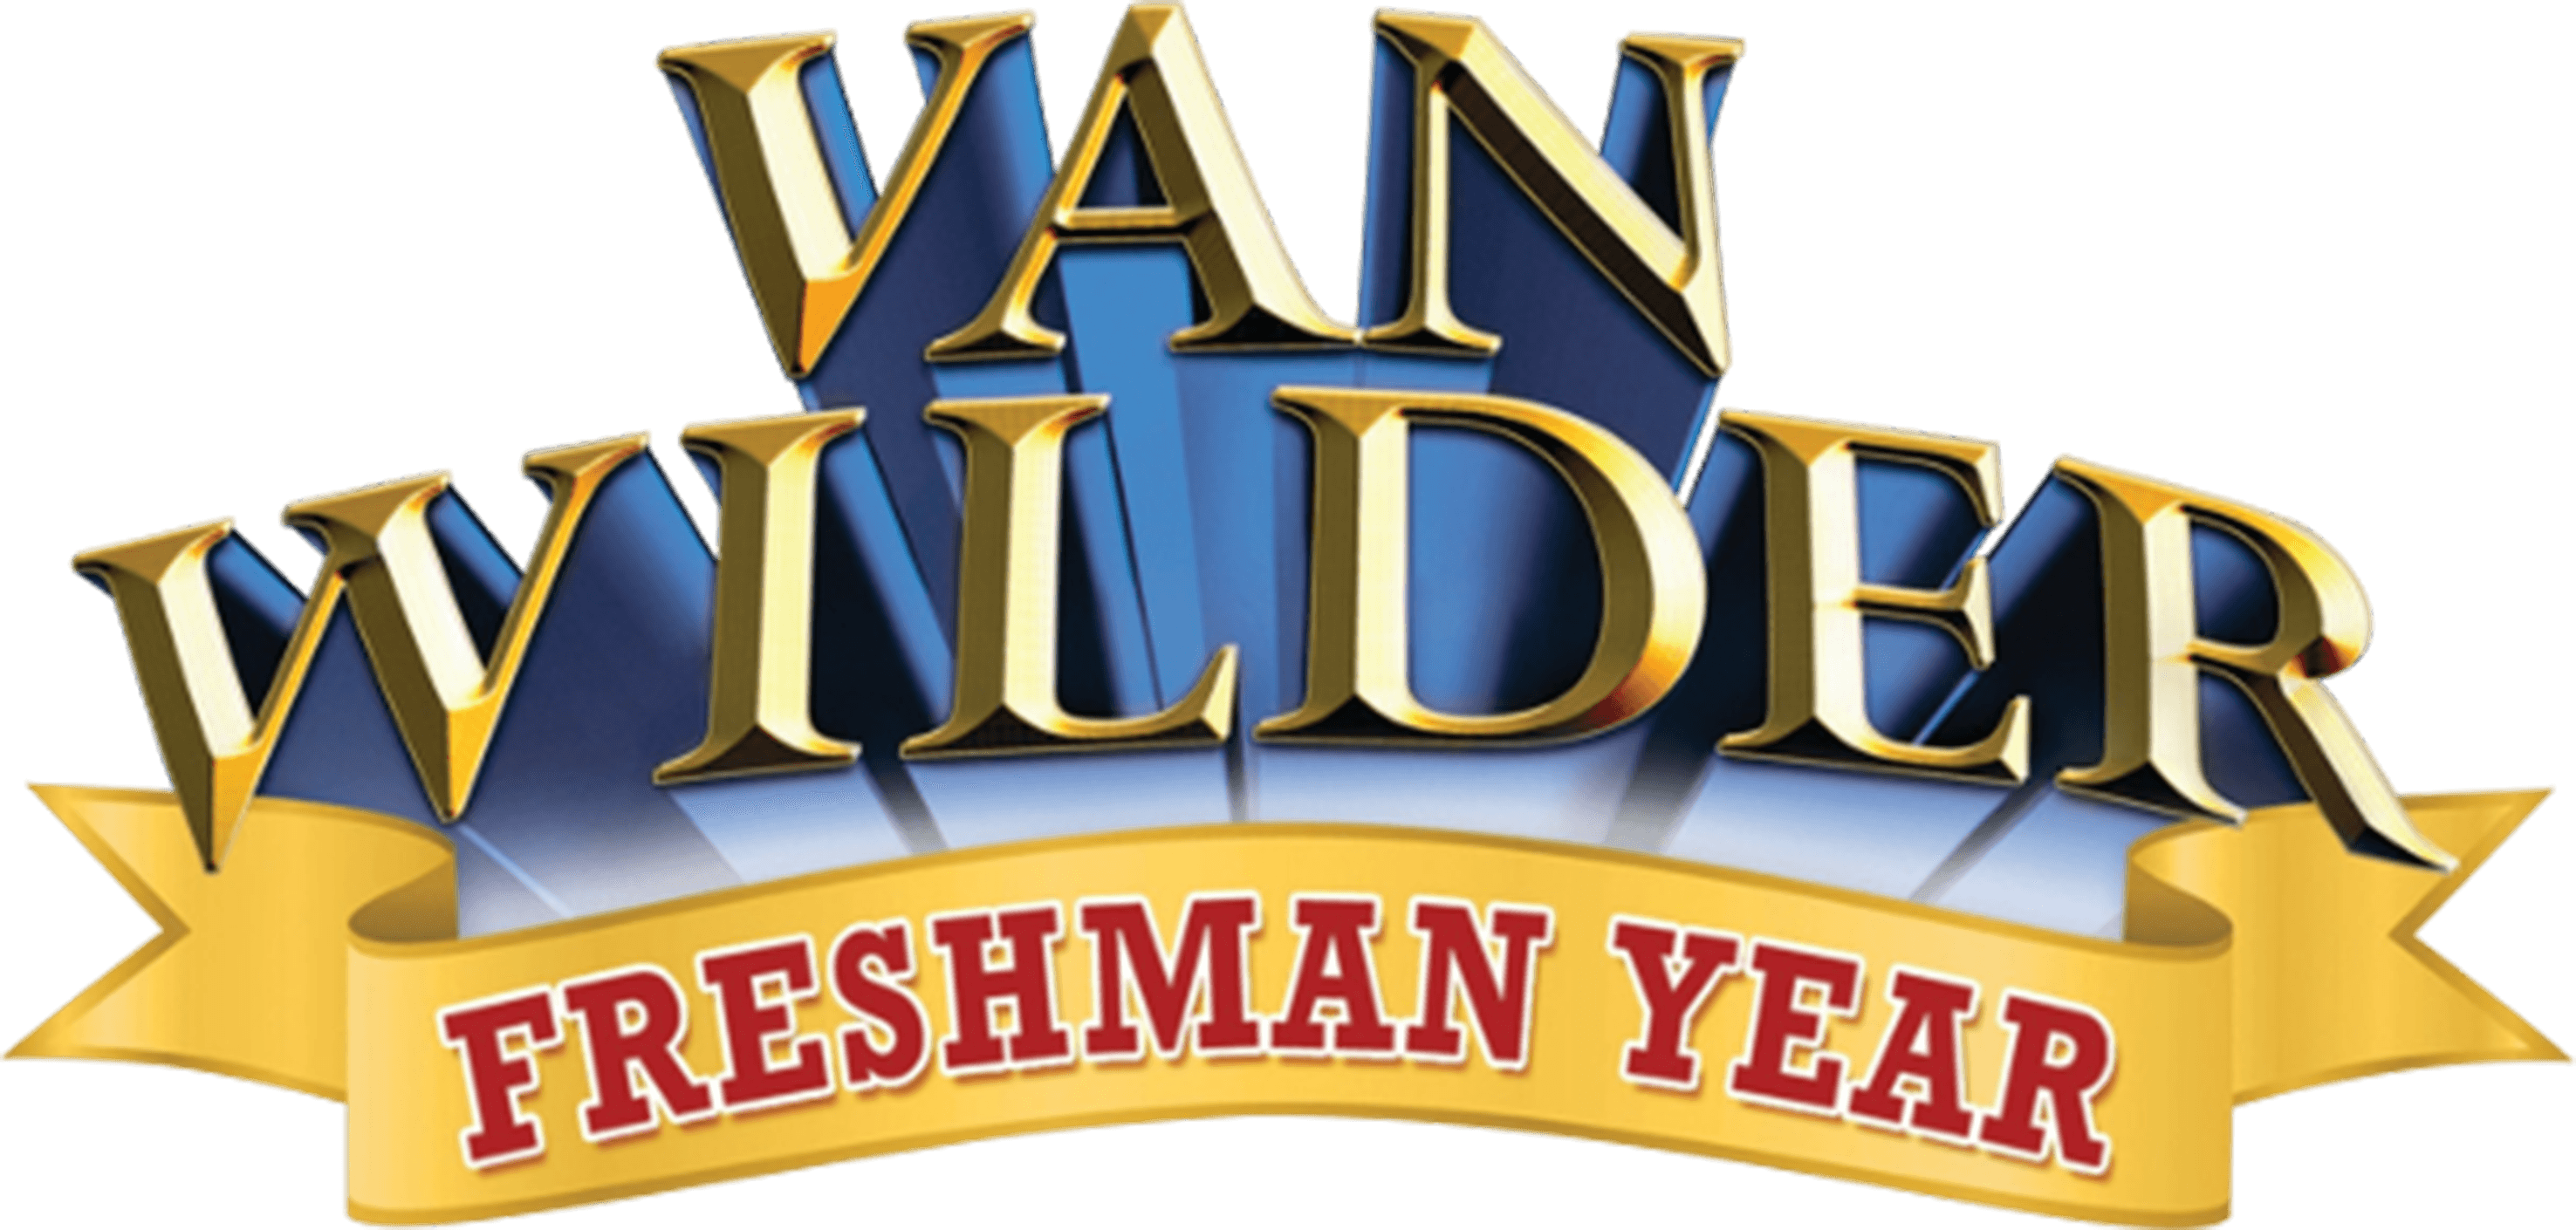 Van Wilder: Freshman Year logo